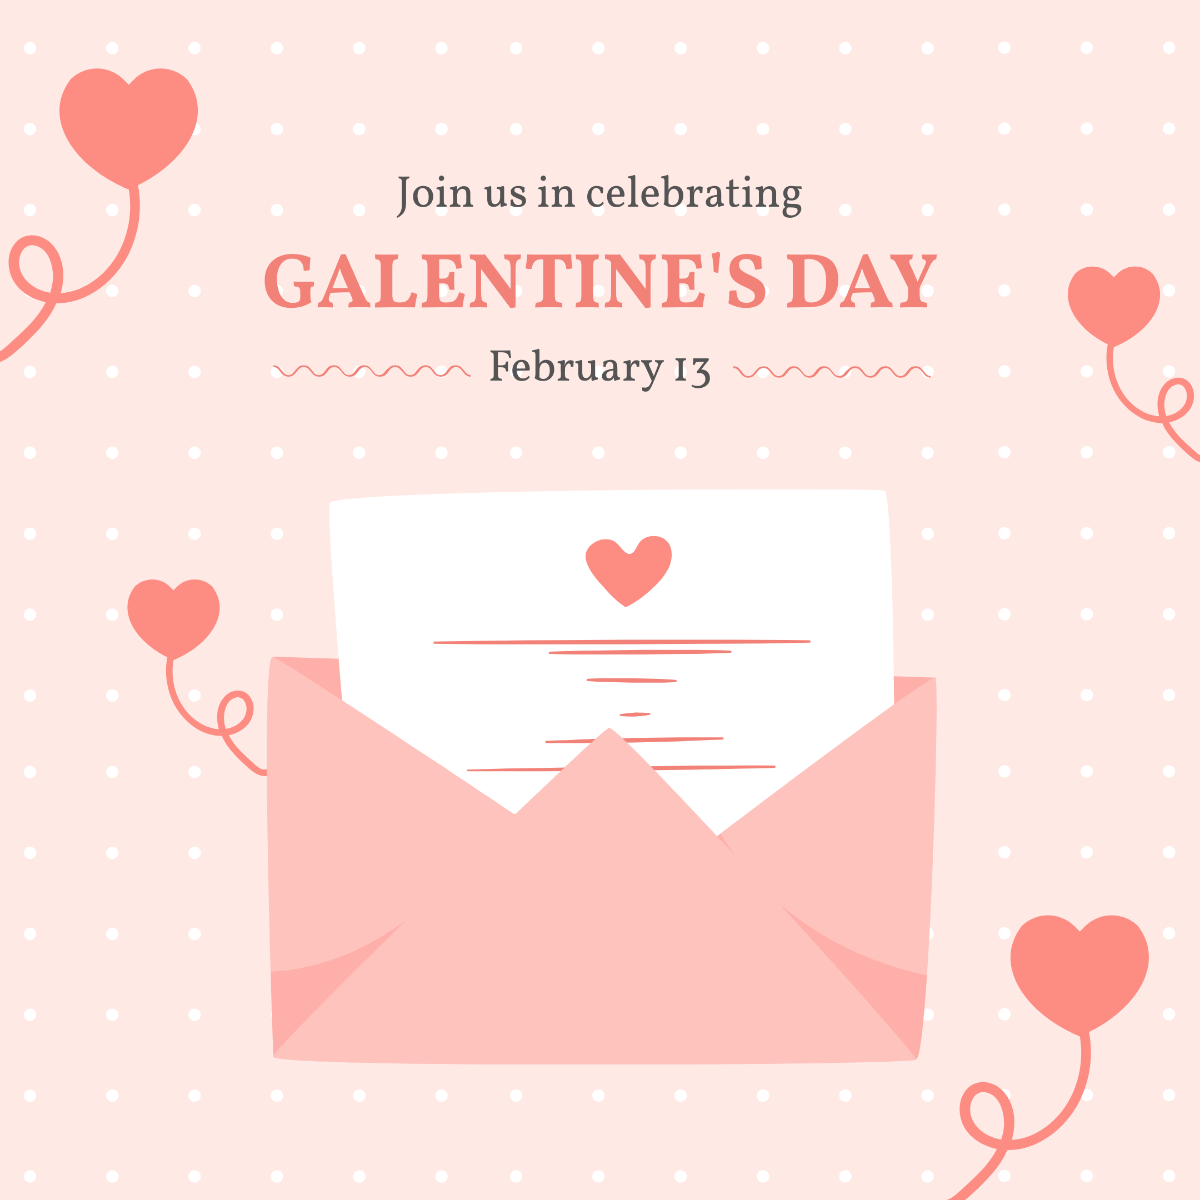 Galentine's Day Invitation Instagram Post